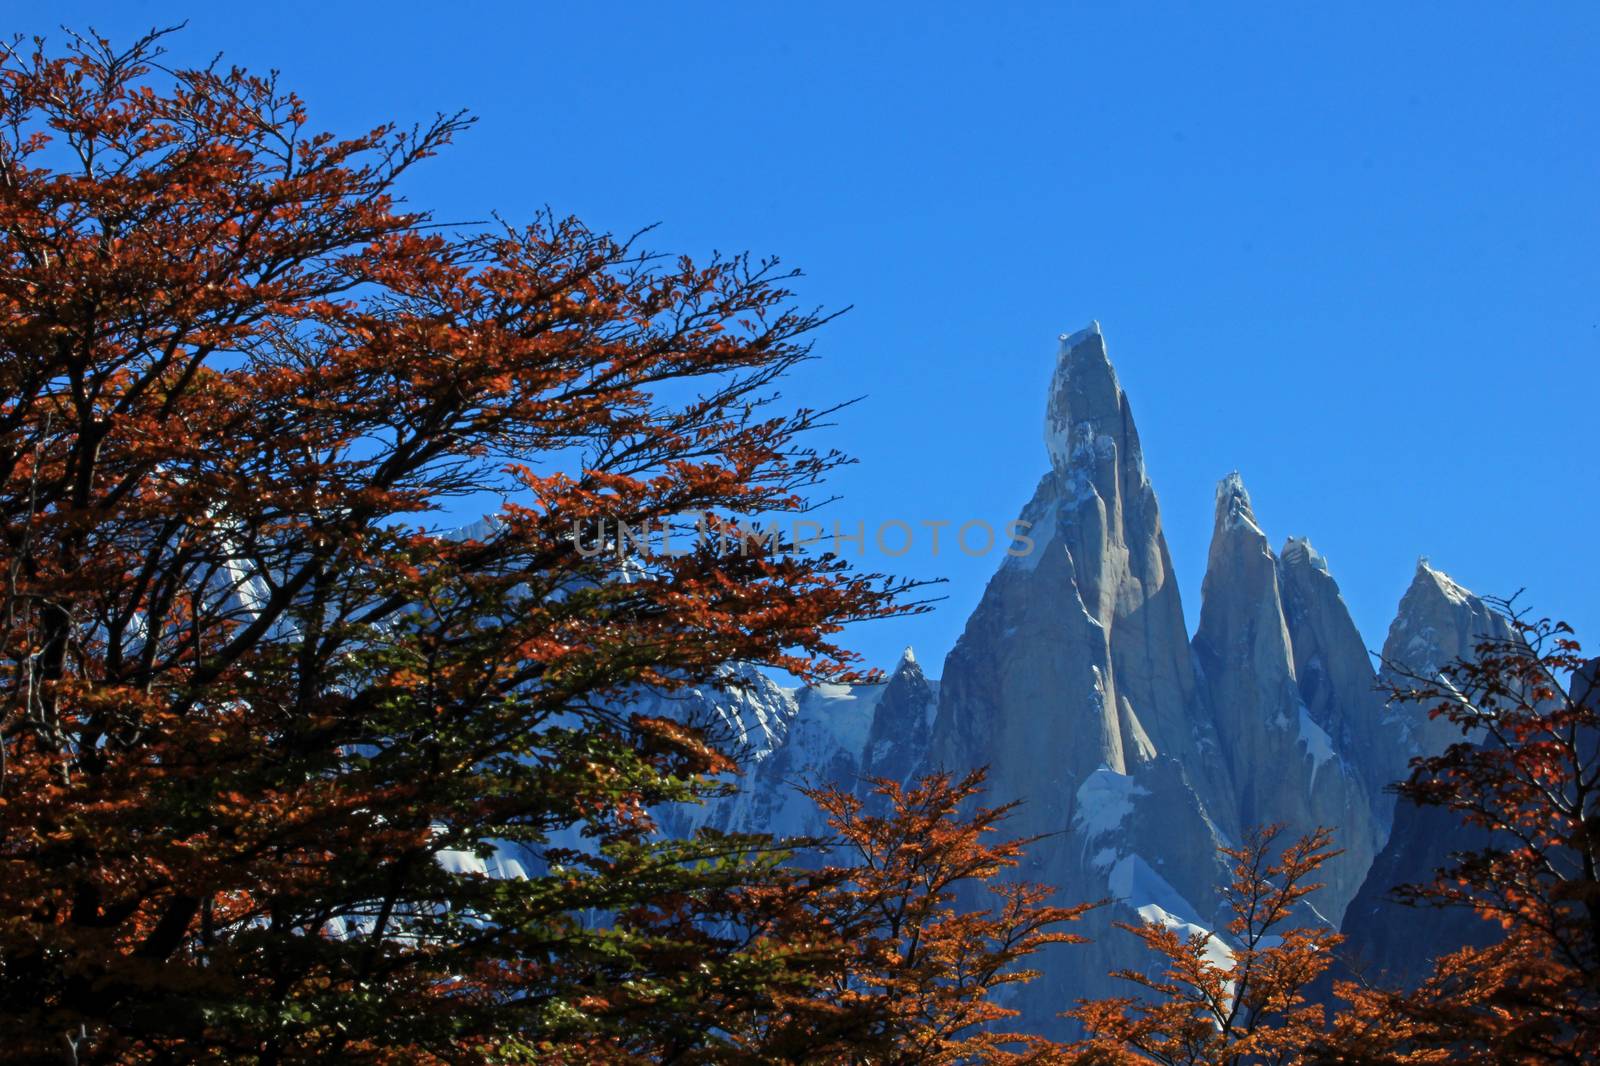 Cerro Torre mountain in autumn colors. Los Glaciares National park, Argentina by cicloco